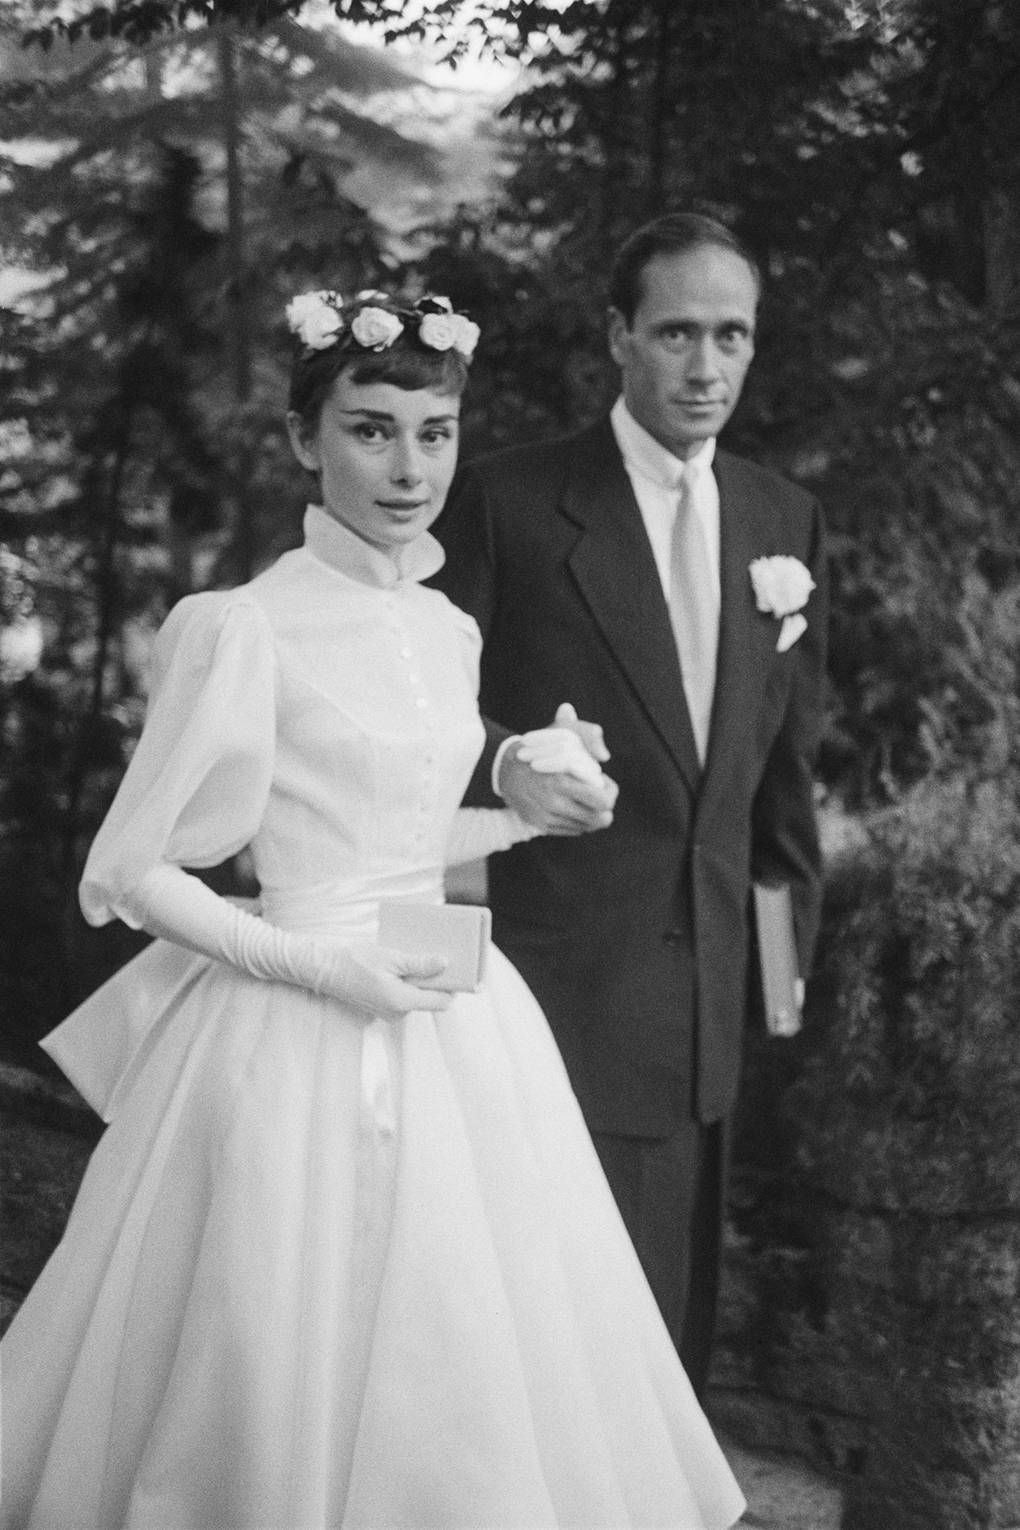 Audrey Hepburn wedding dress designed by Balmain